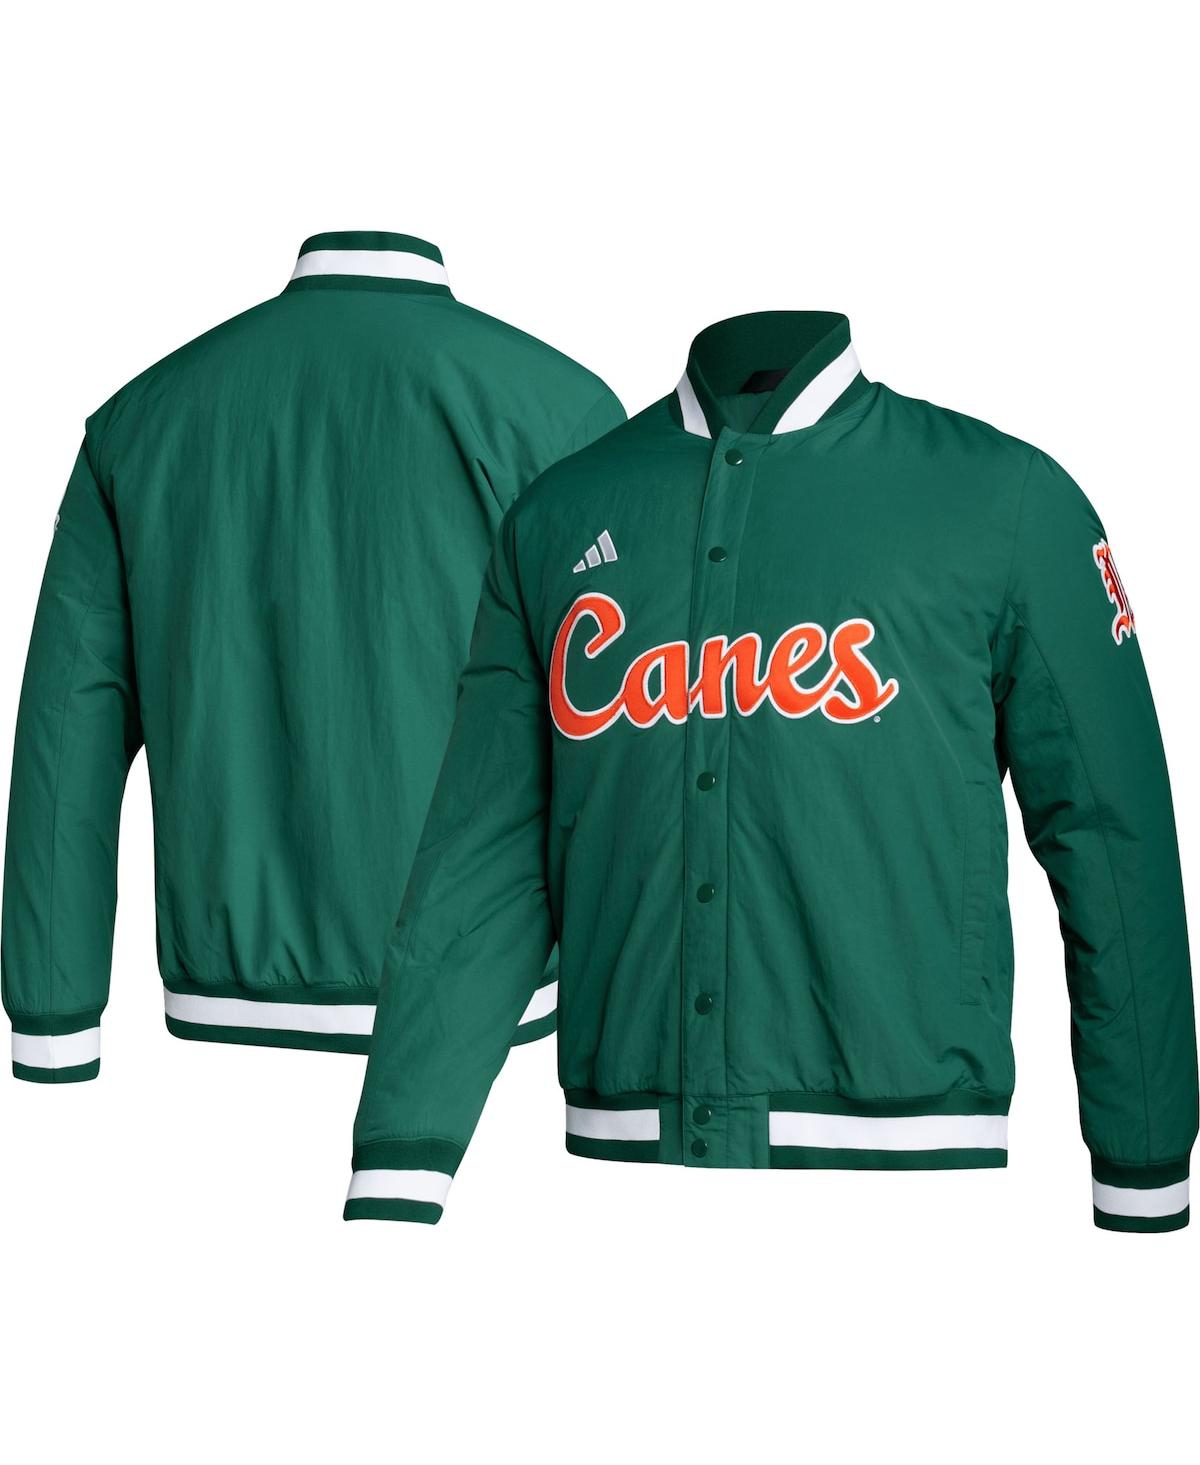 Shop Adidas Originals Men's Adidas Green Miami Hurricanes Baseball Coaches Full-snap Jacket